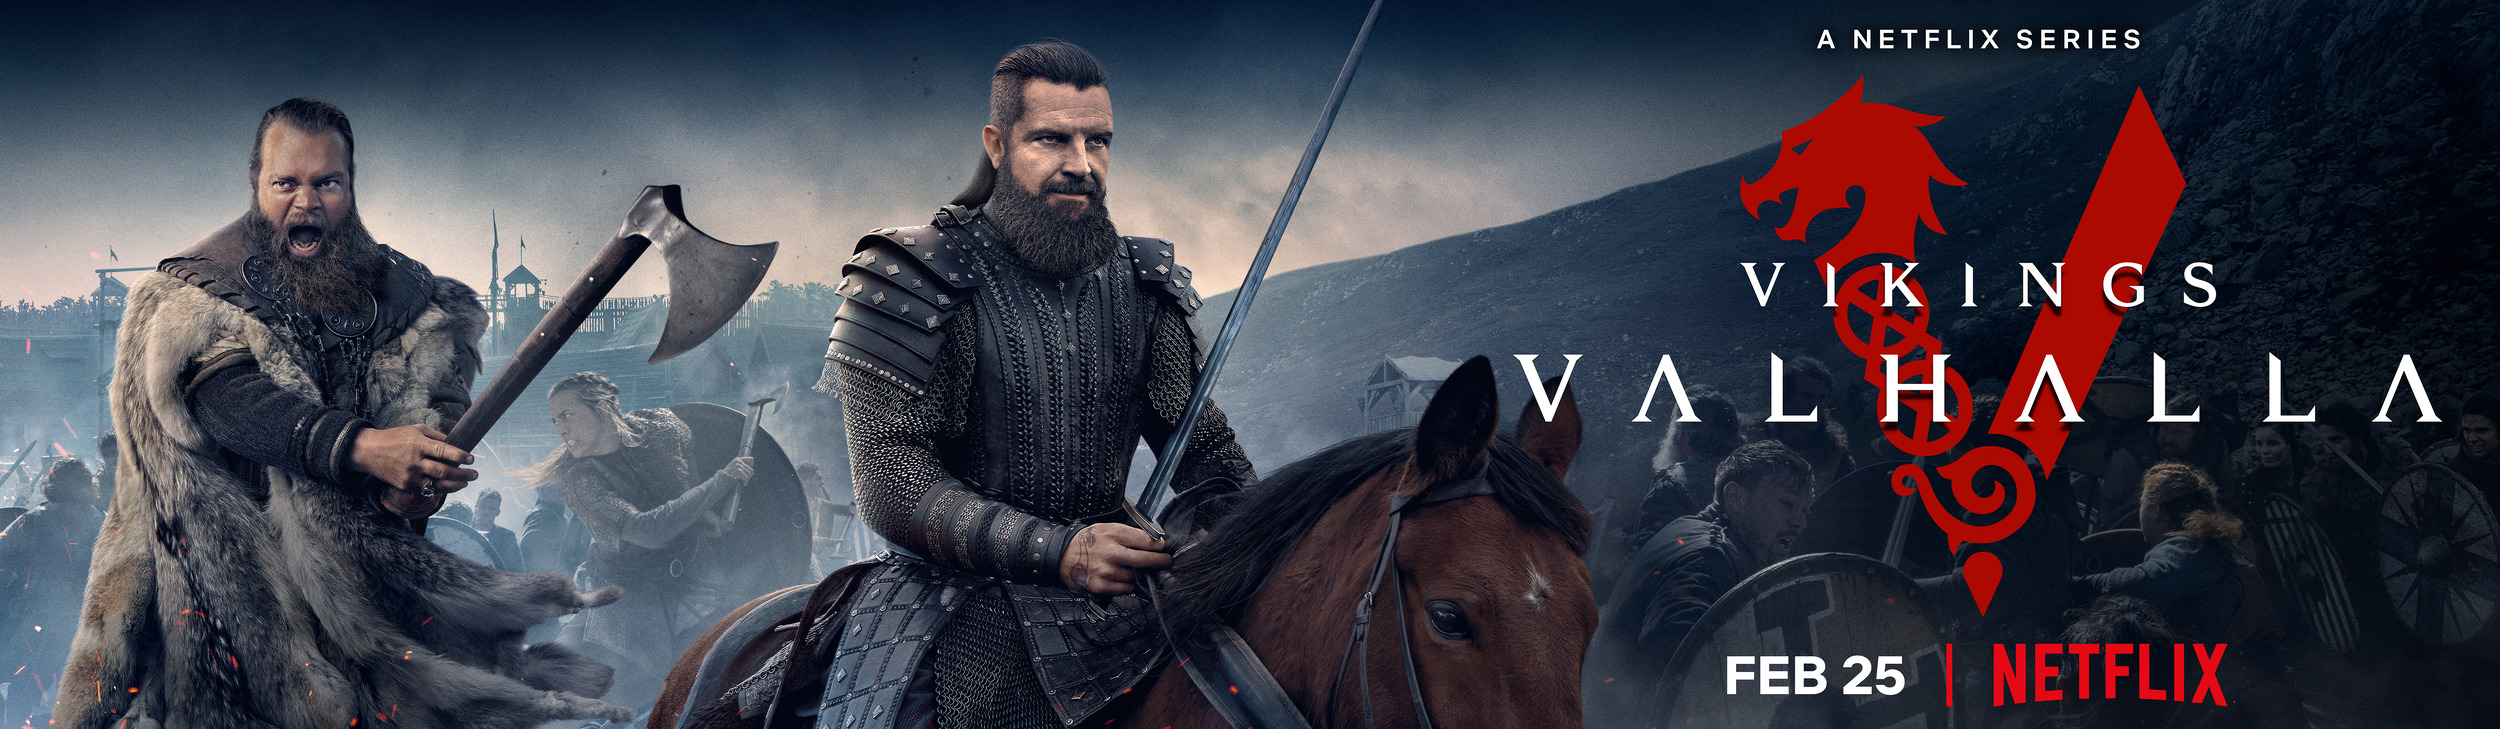 Mega Sized TV Poster Image for Vikings: Valhalla (#9 of 18)